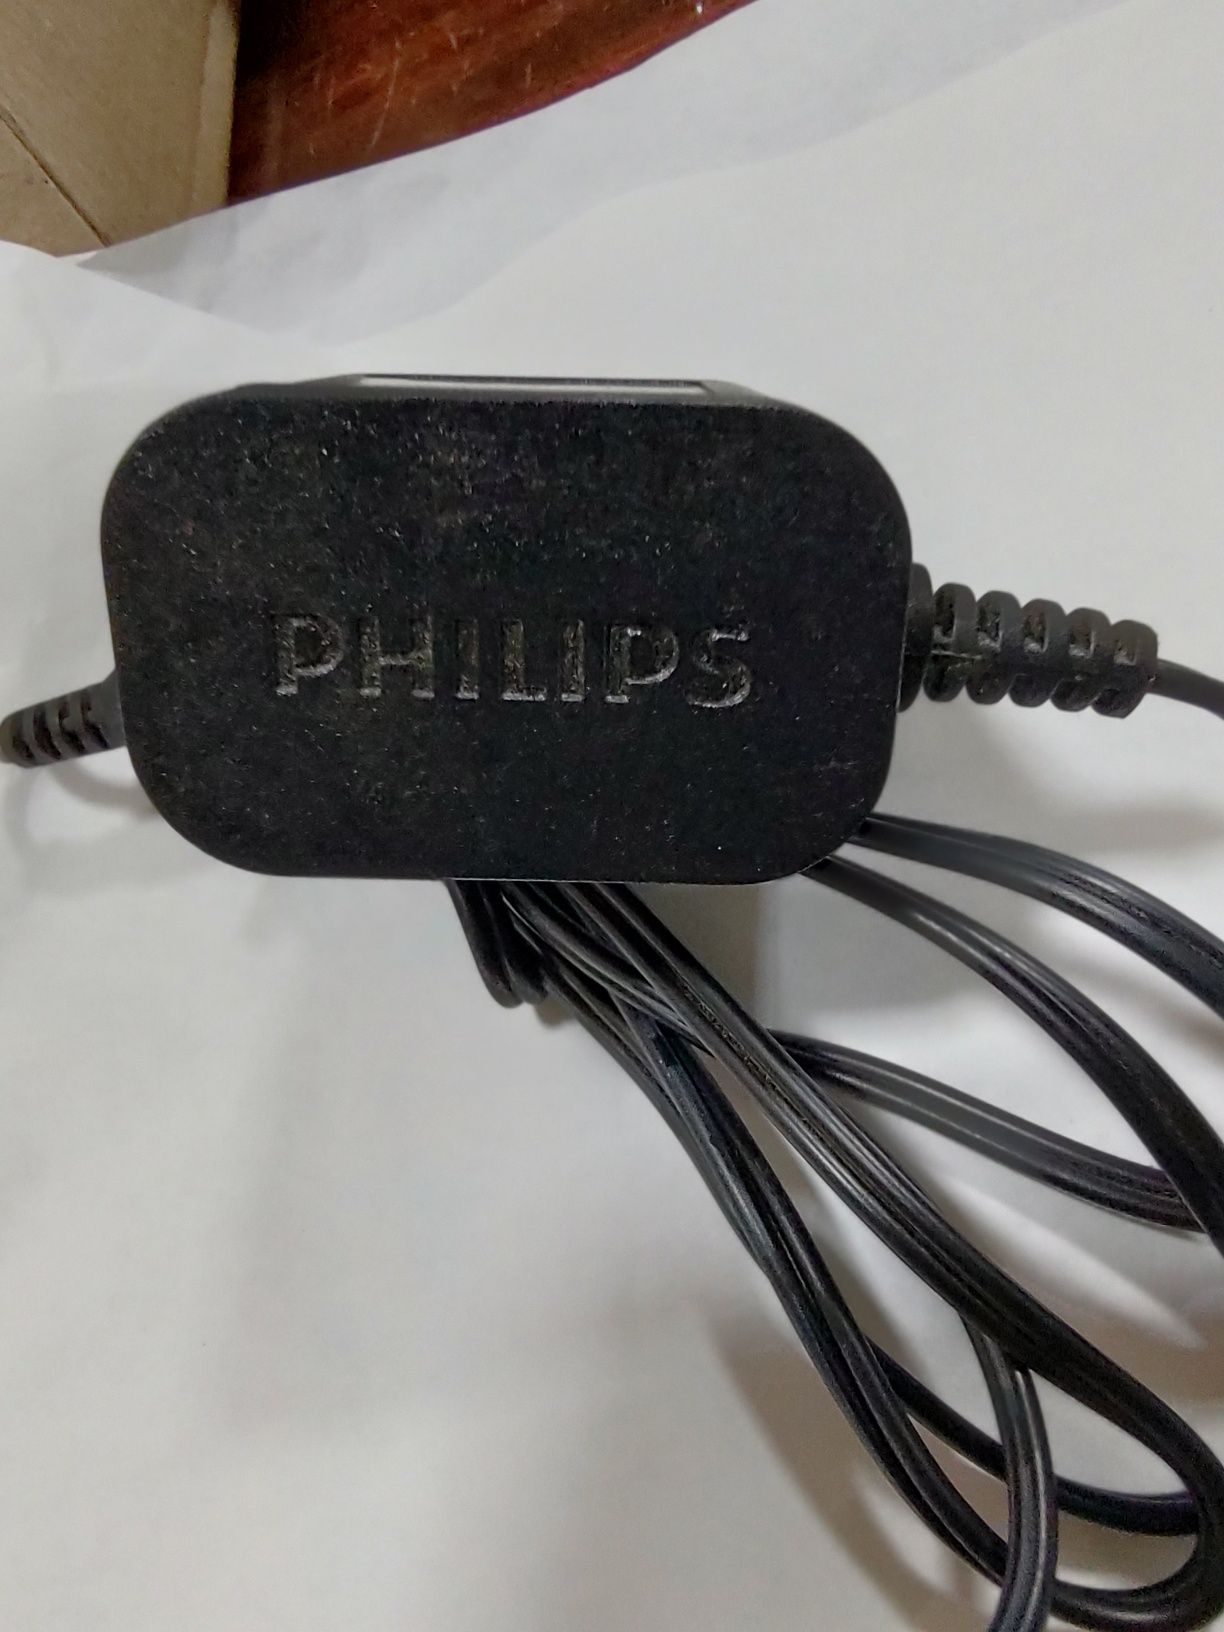 Бездротовий аудіо адаптер Philips Hi-fi